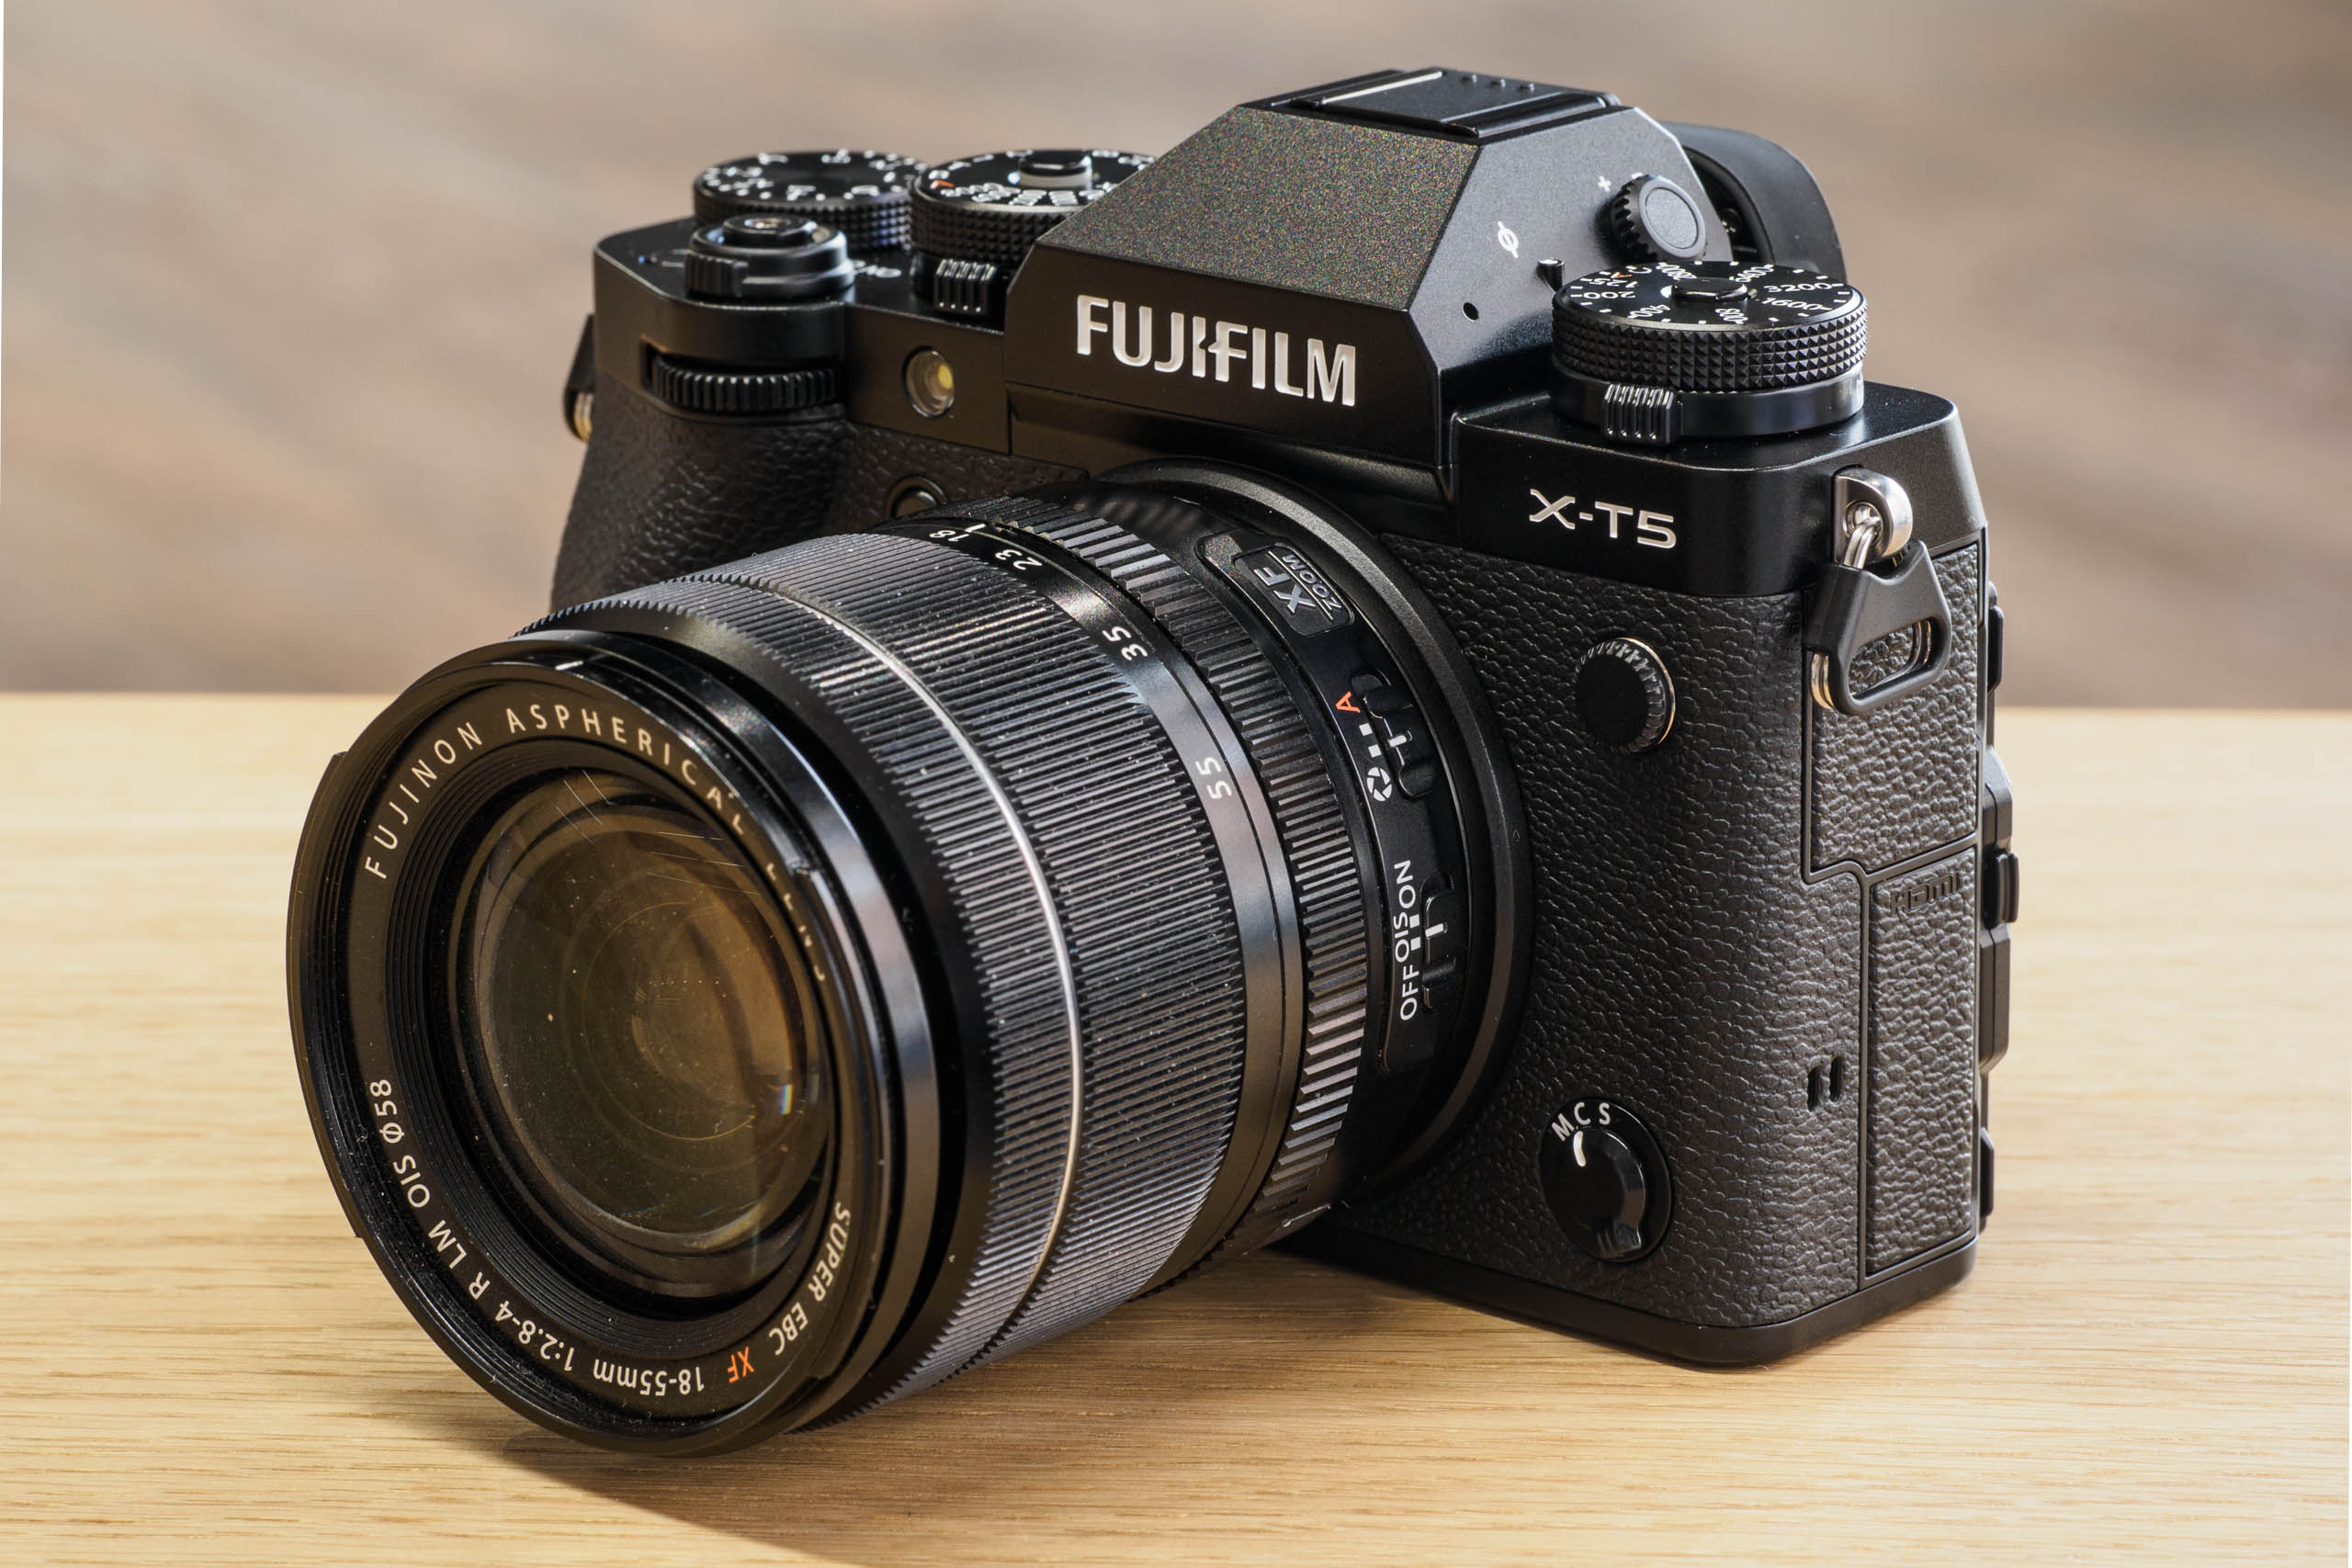 Fujifilm X-T5 with 18-55mm f/2.8-4 kit lens